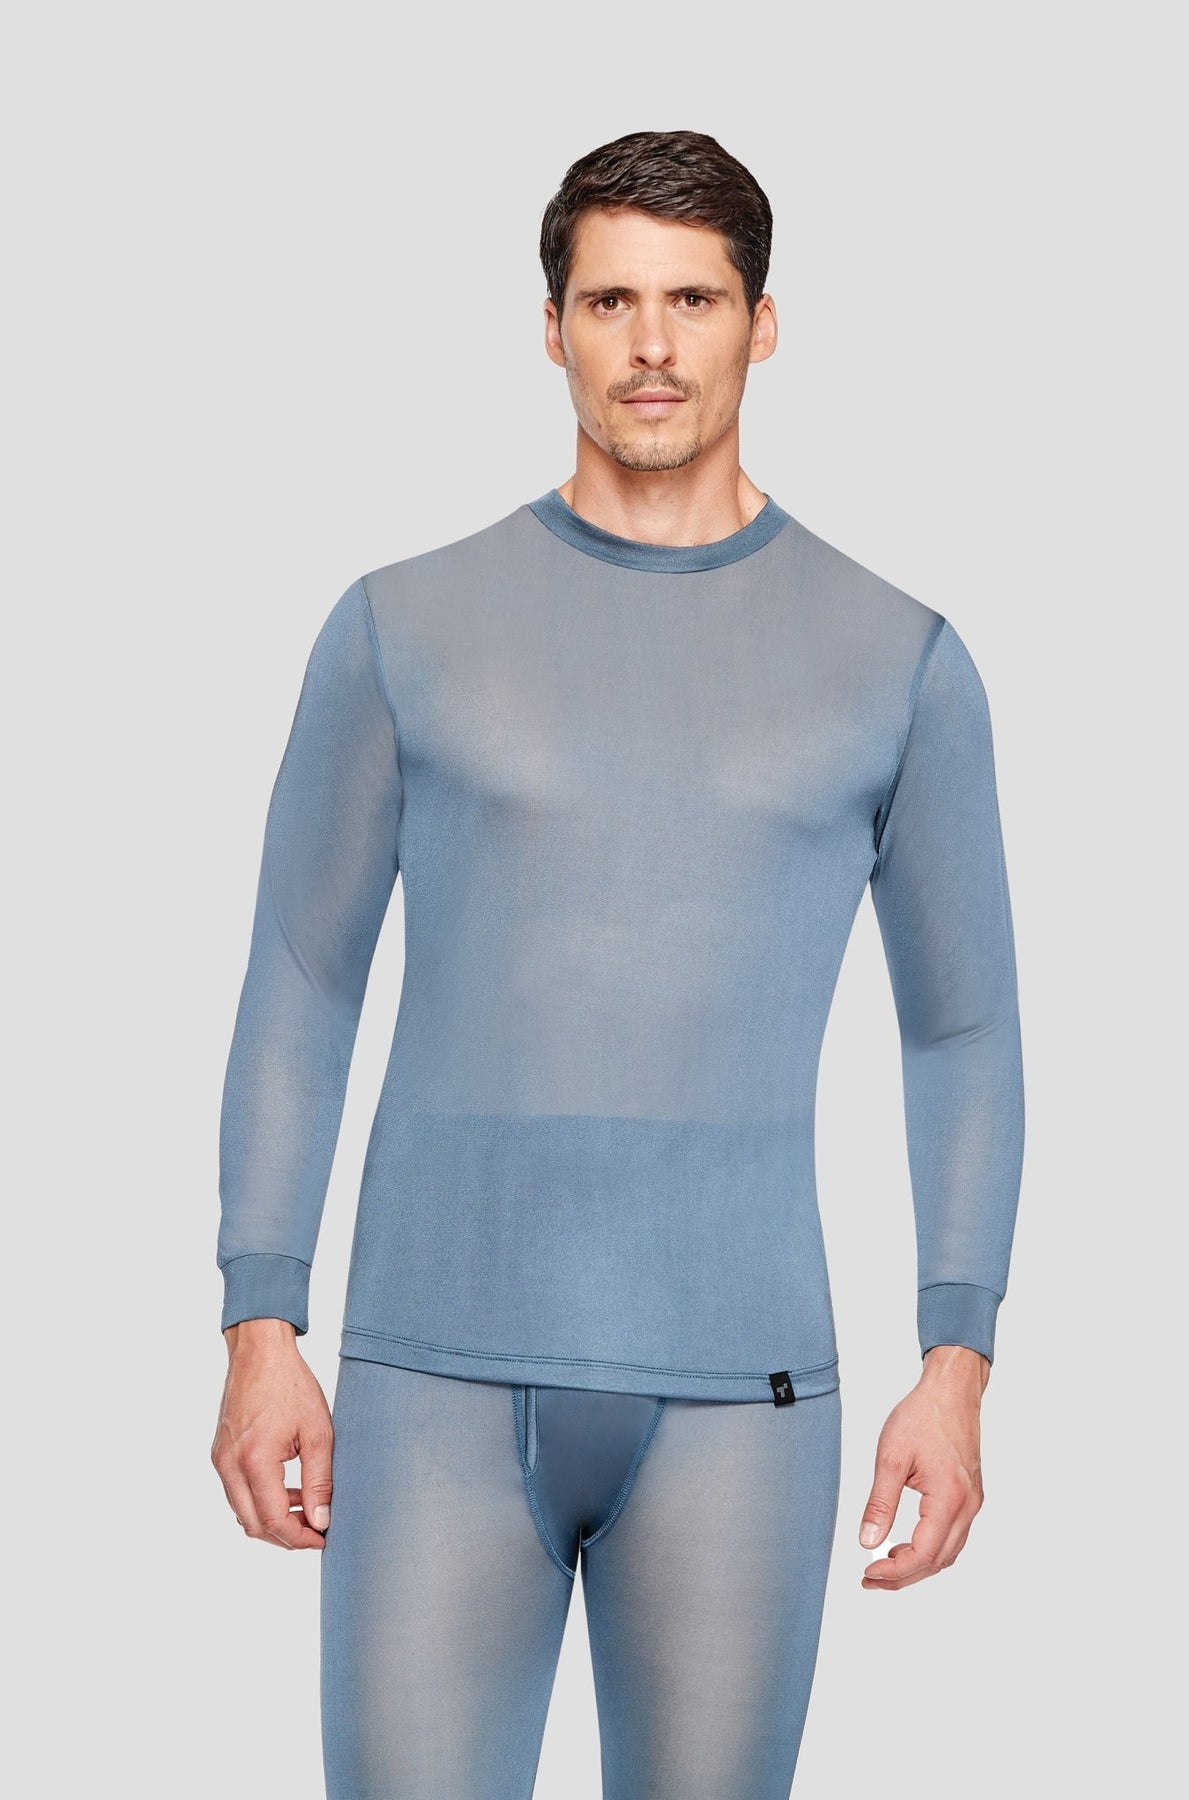 1.0 Men's Thermasilk® Heritage Lightweight Thermal Pants - Steel Blue / S